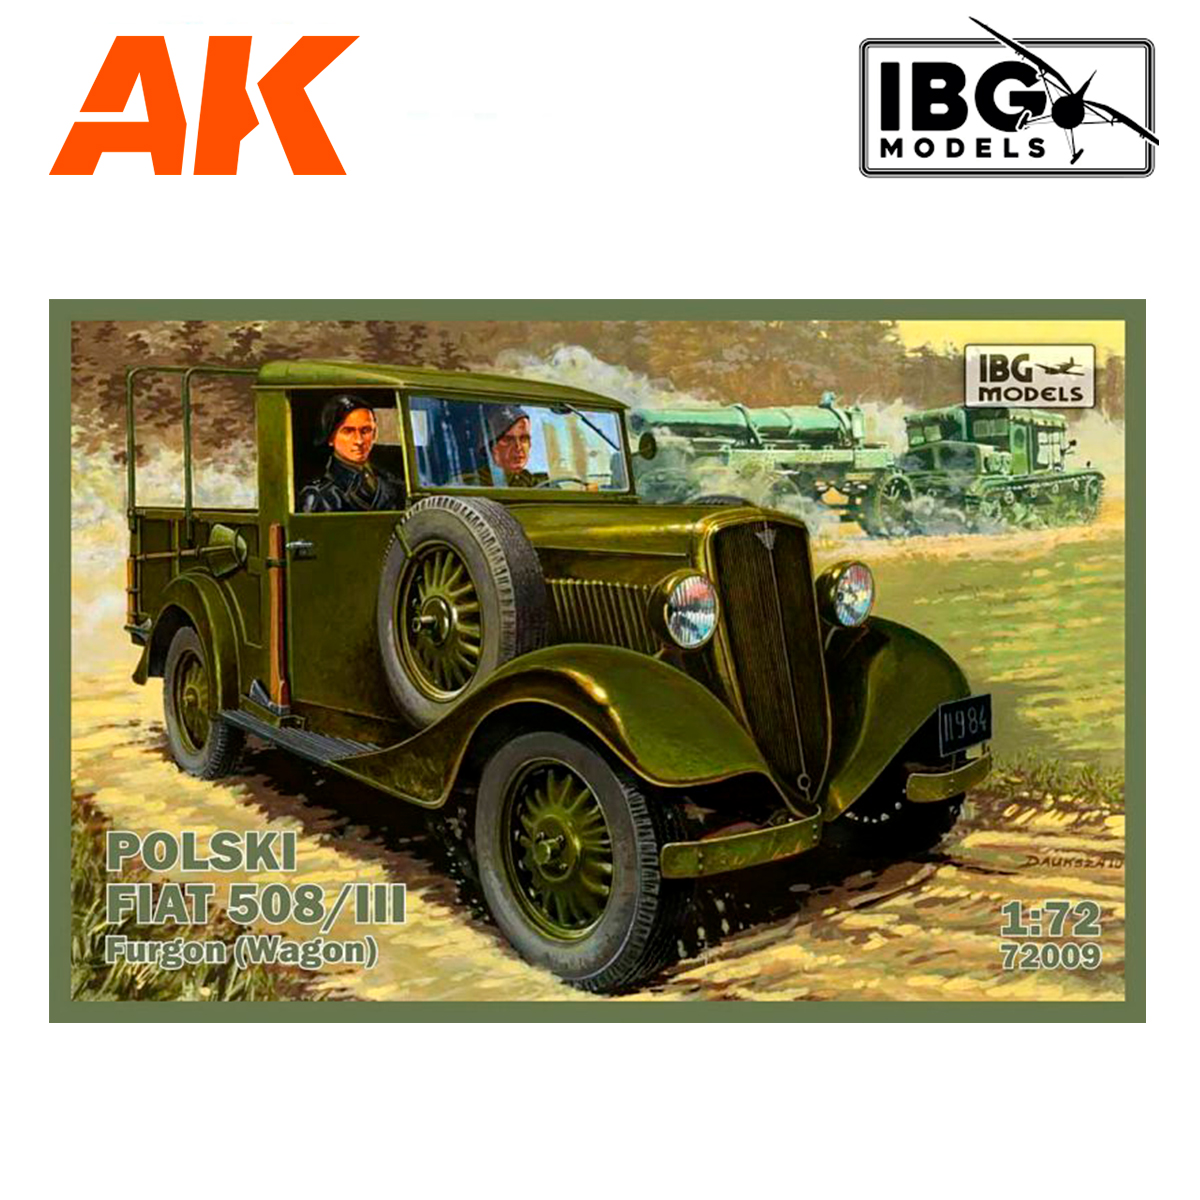 1/72 IBG POLISH ARMY 1939 MARKINGS - POLSKI FIAT 508/III FURGON WAGON 